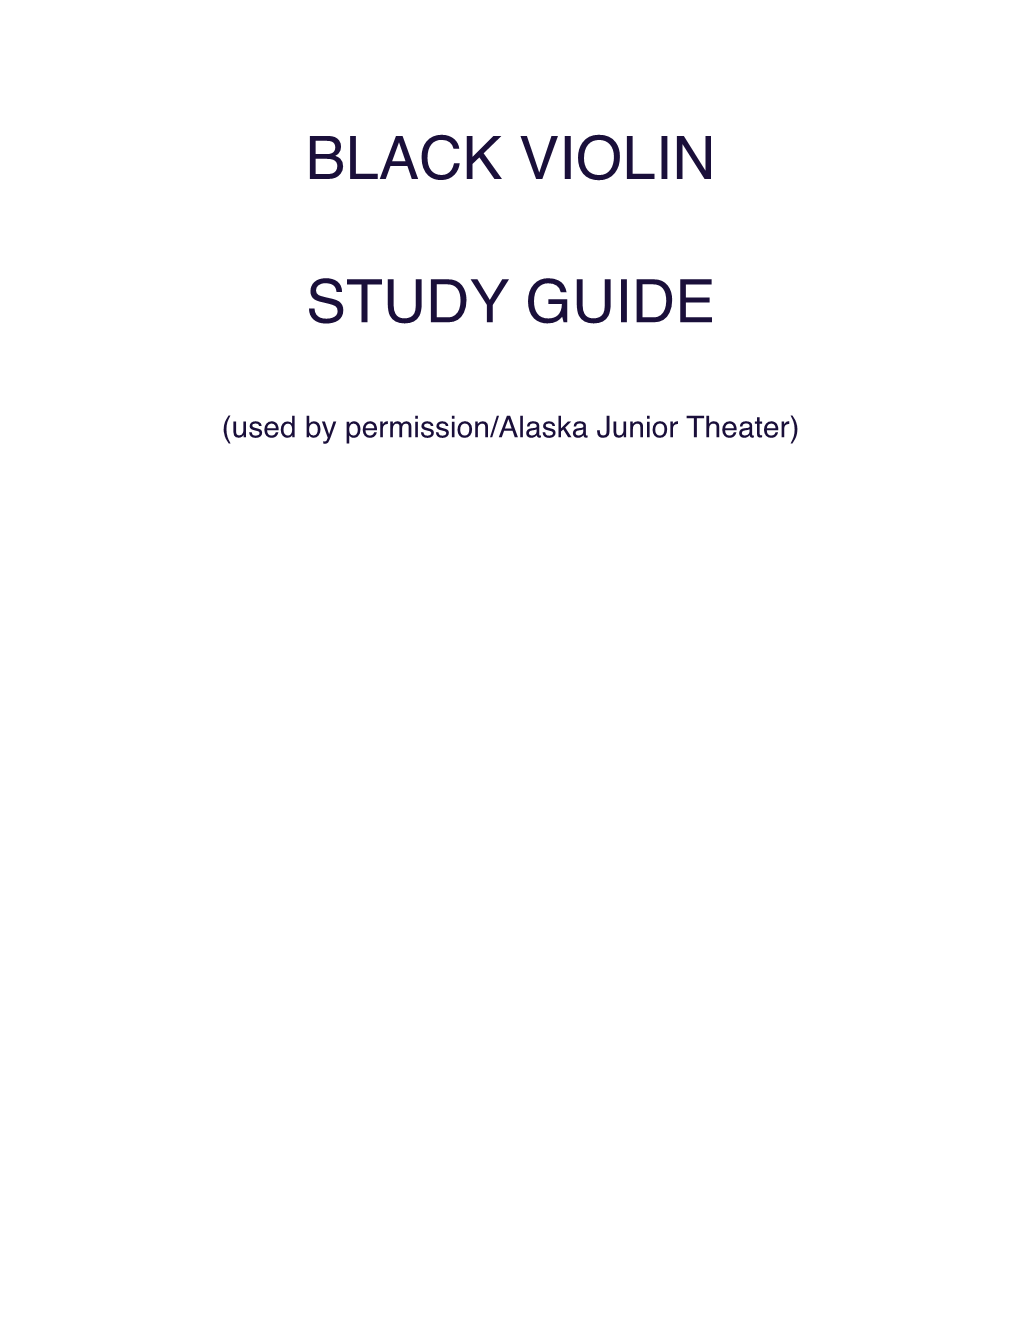 Black Violin Study Guide